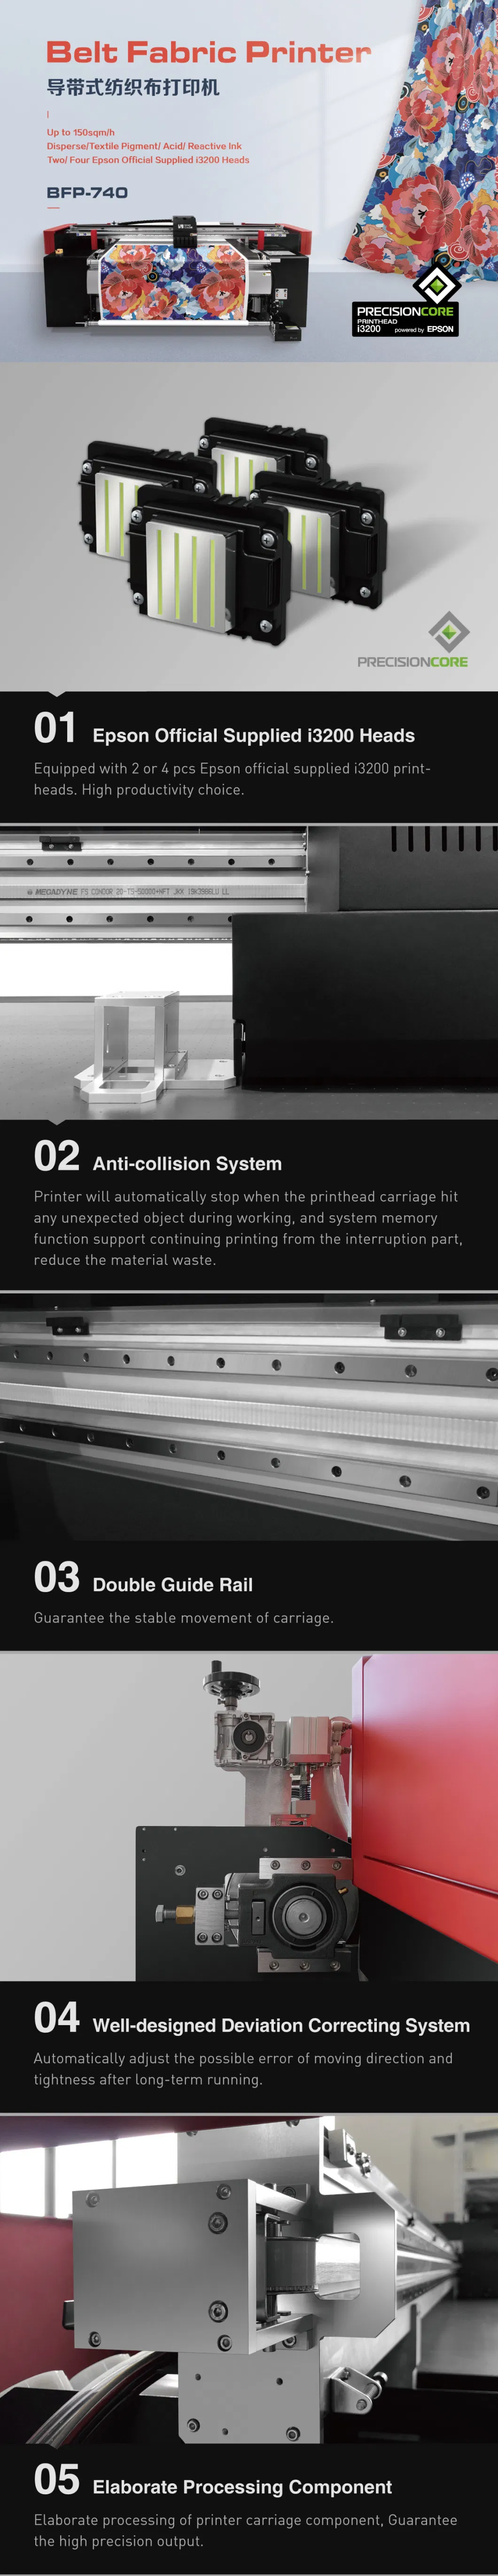 2021 Cost Effective 1.8 Meter Format 2/4 I3200 Head 2400 Dpi Direct to Fabric Digital Textile Belt Printer